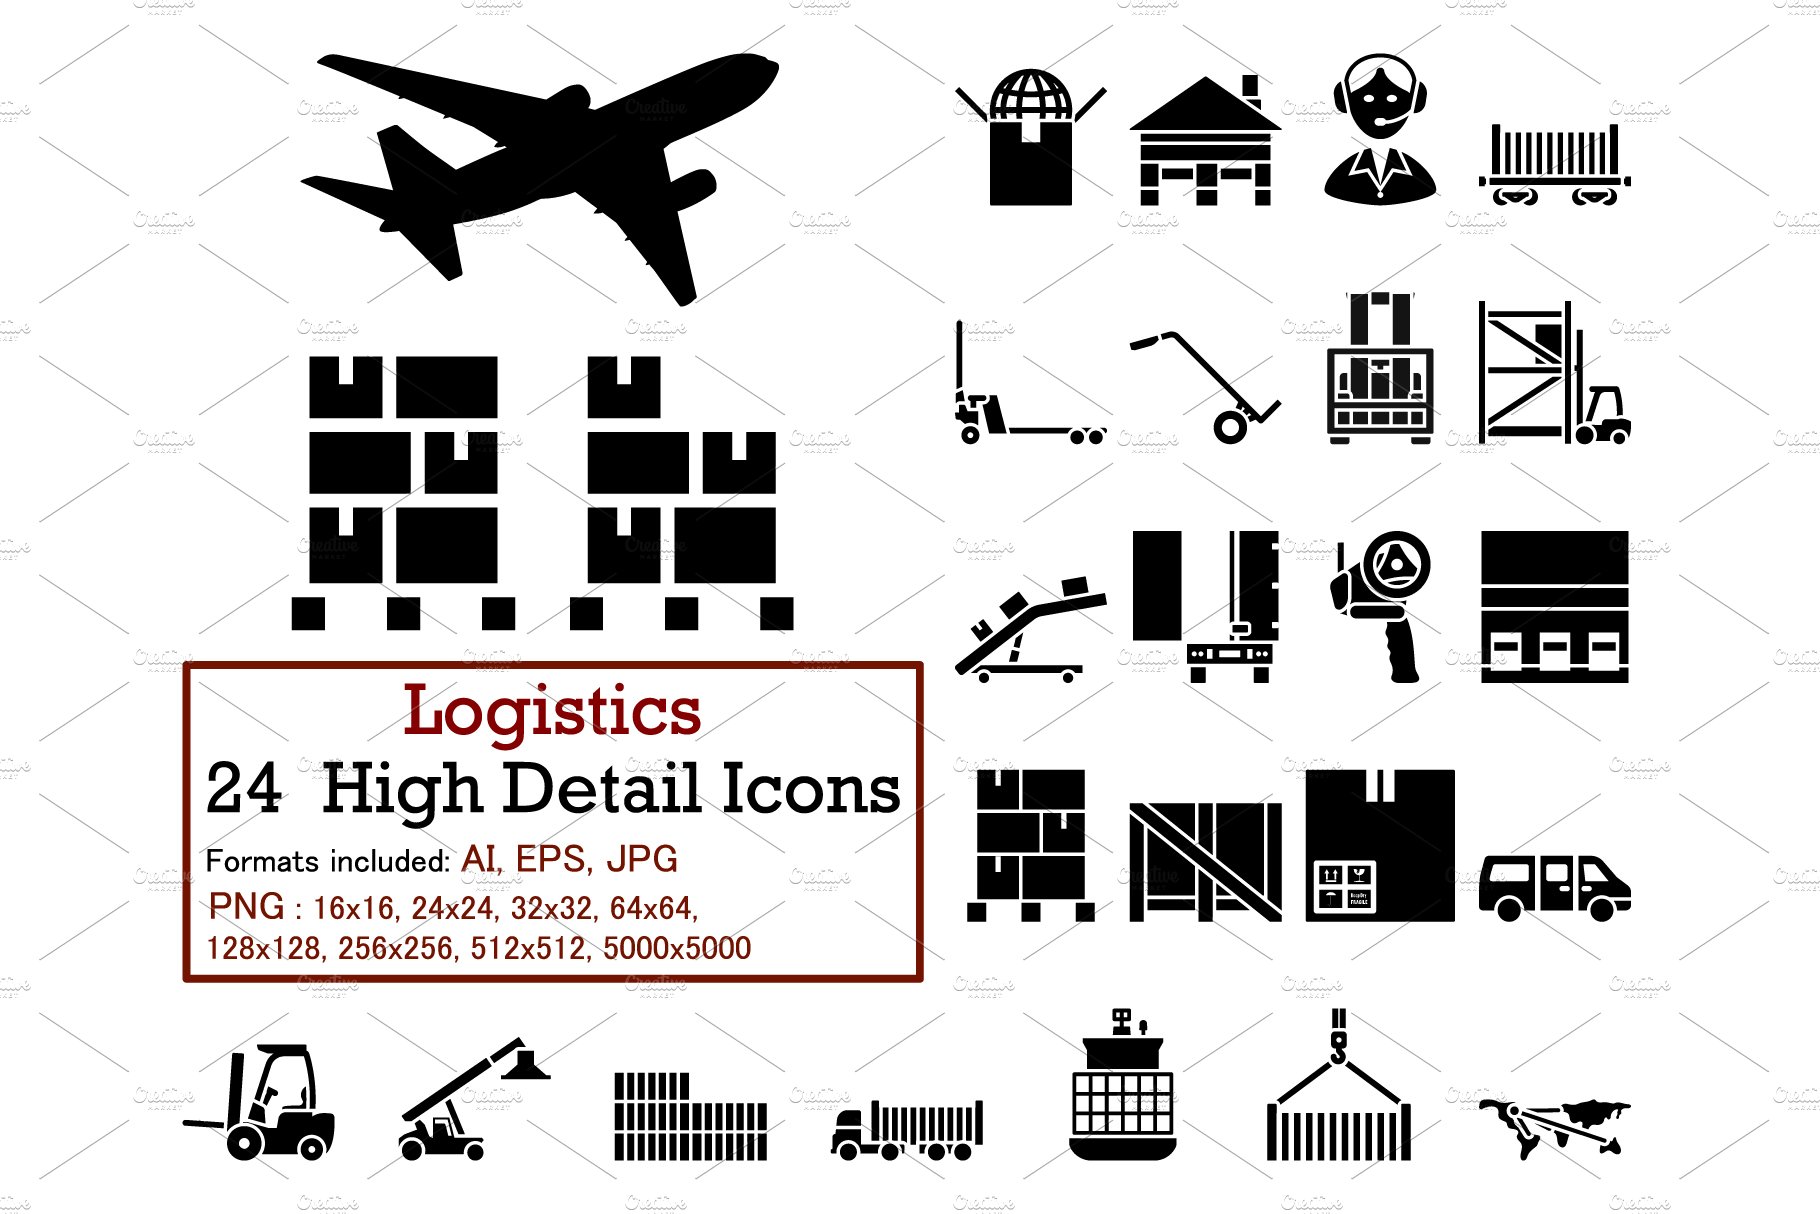 Logistics Icon Set cover image.